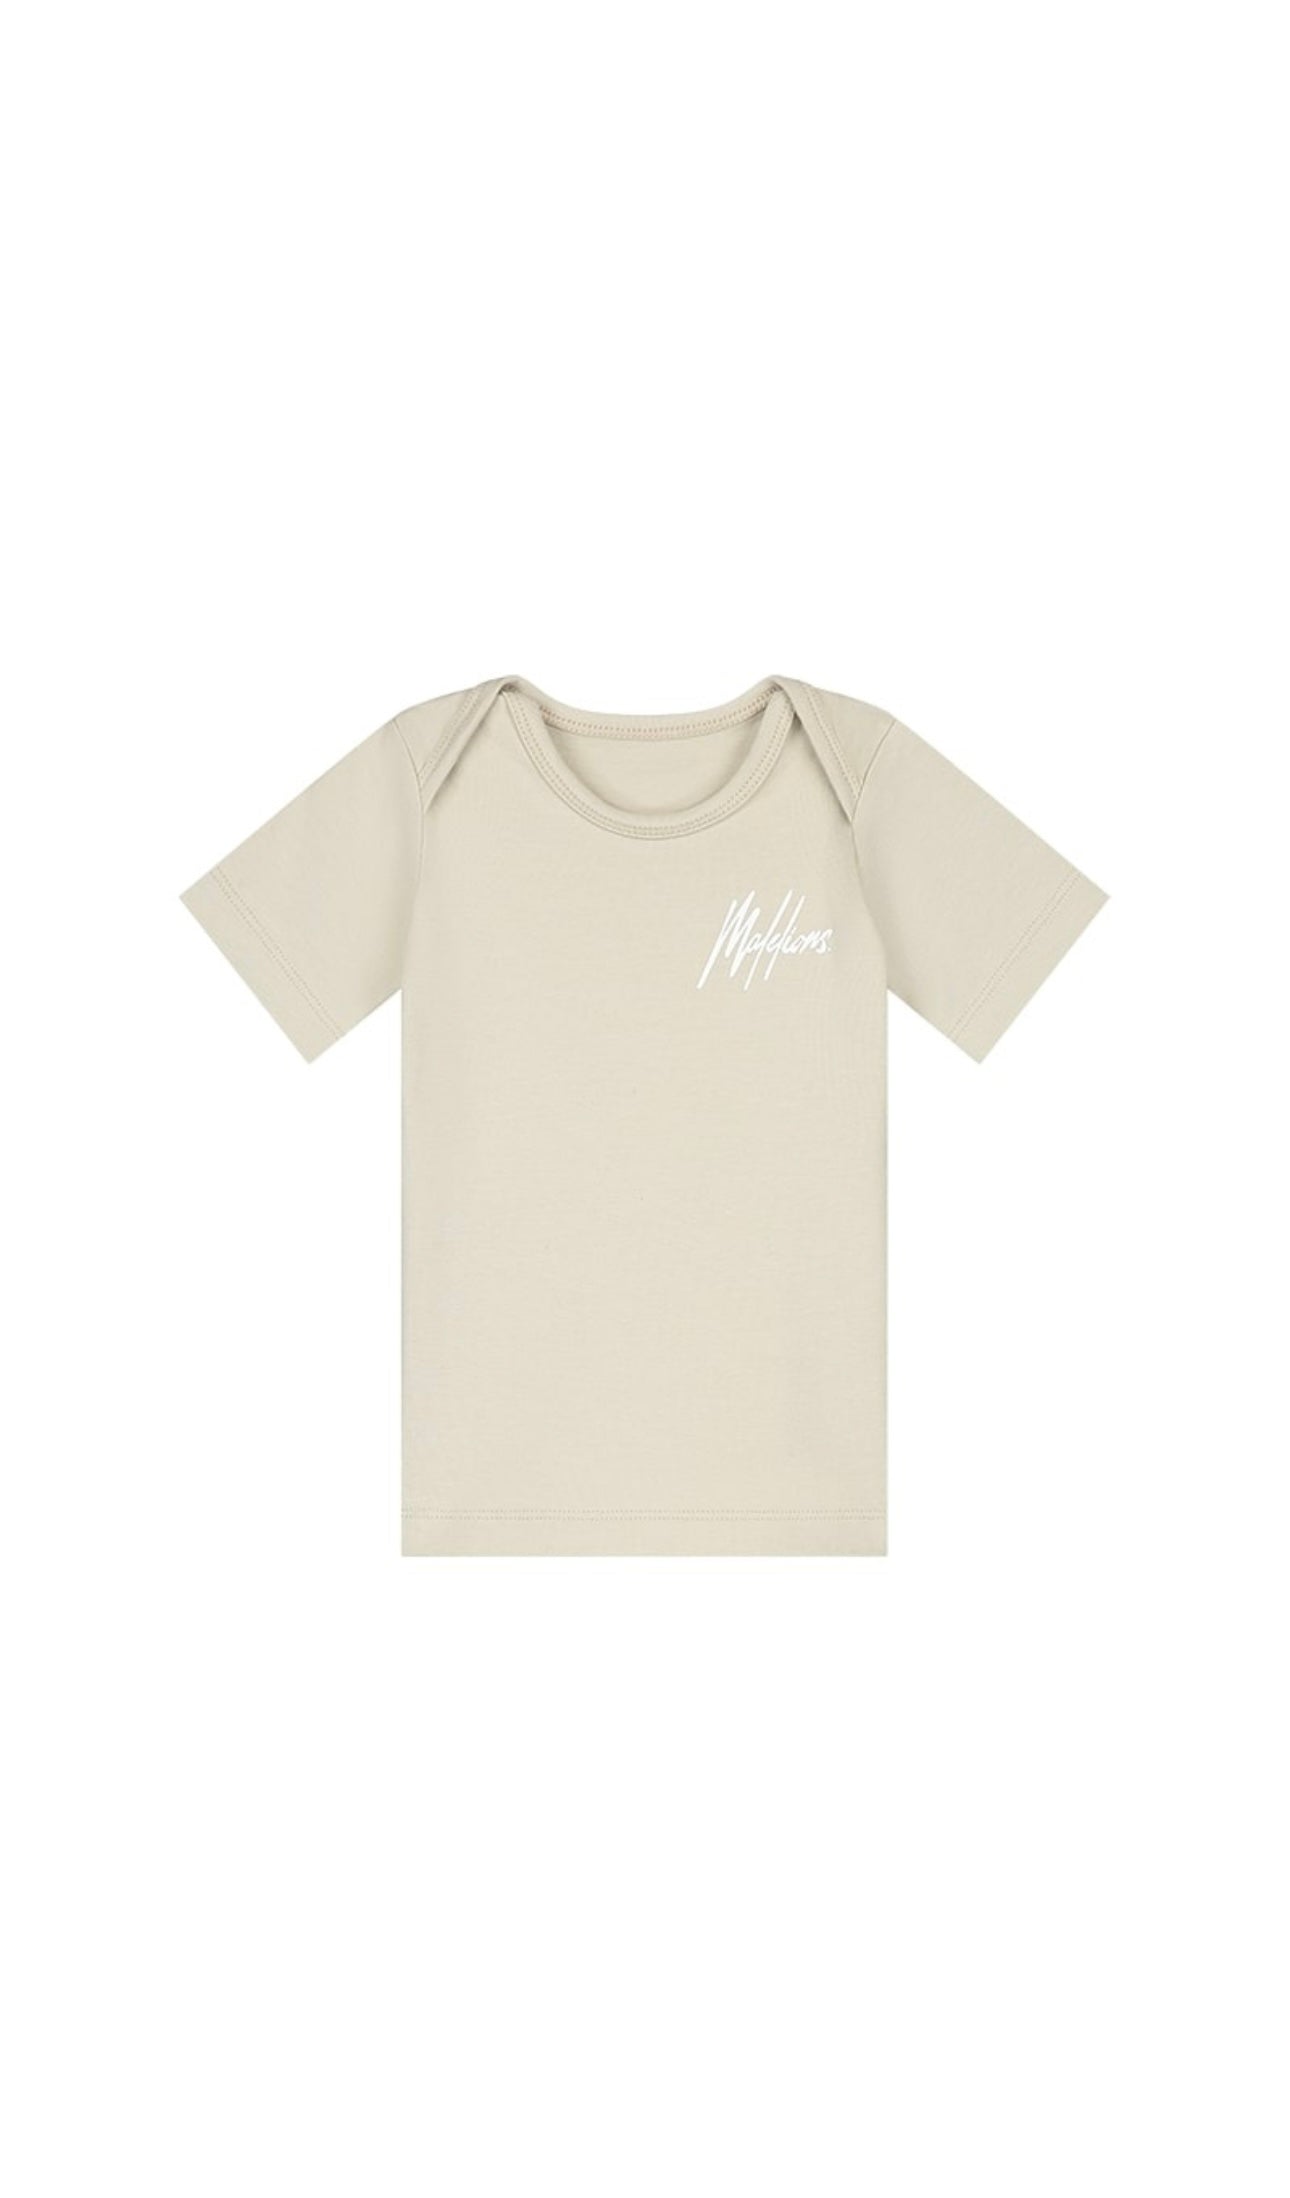 Malelions baby t-shirt beige